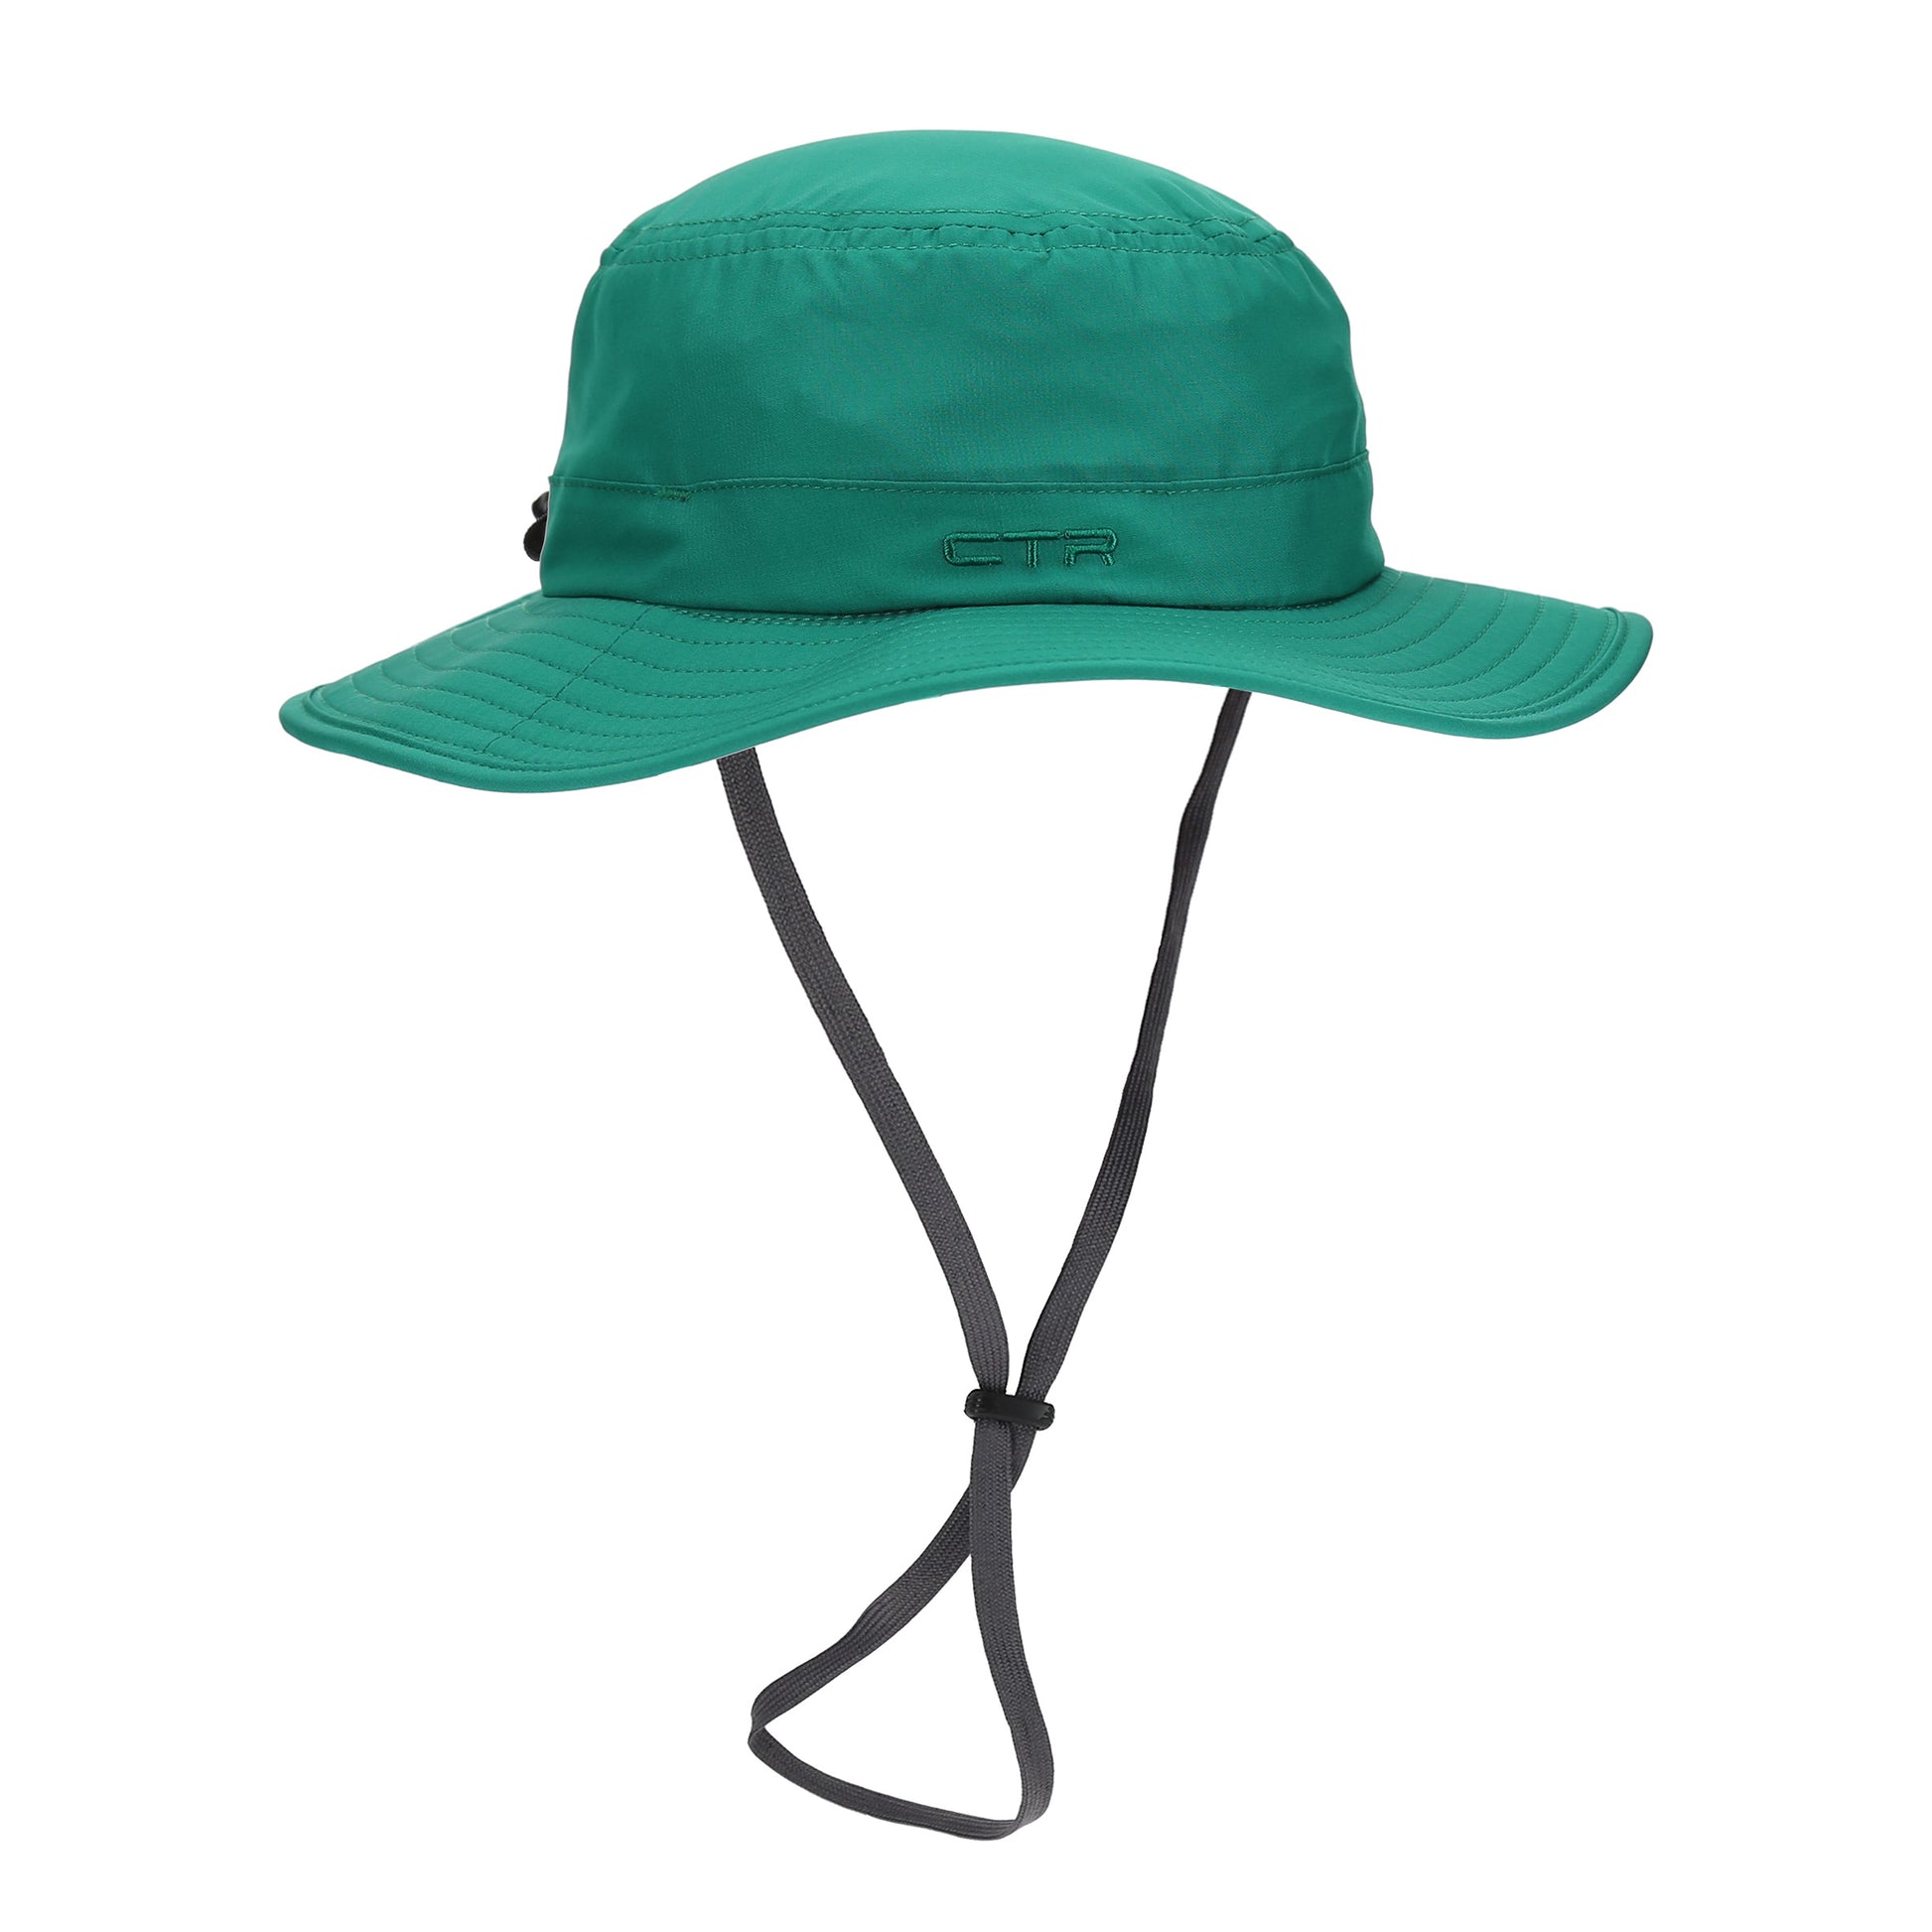 Kids Savannah Bucket Hat CTR Style:1274-Bucket Hat-CTR Outdoors